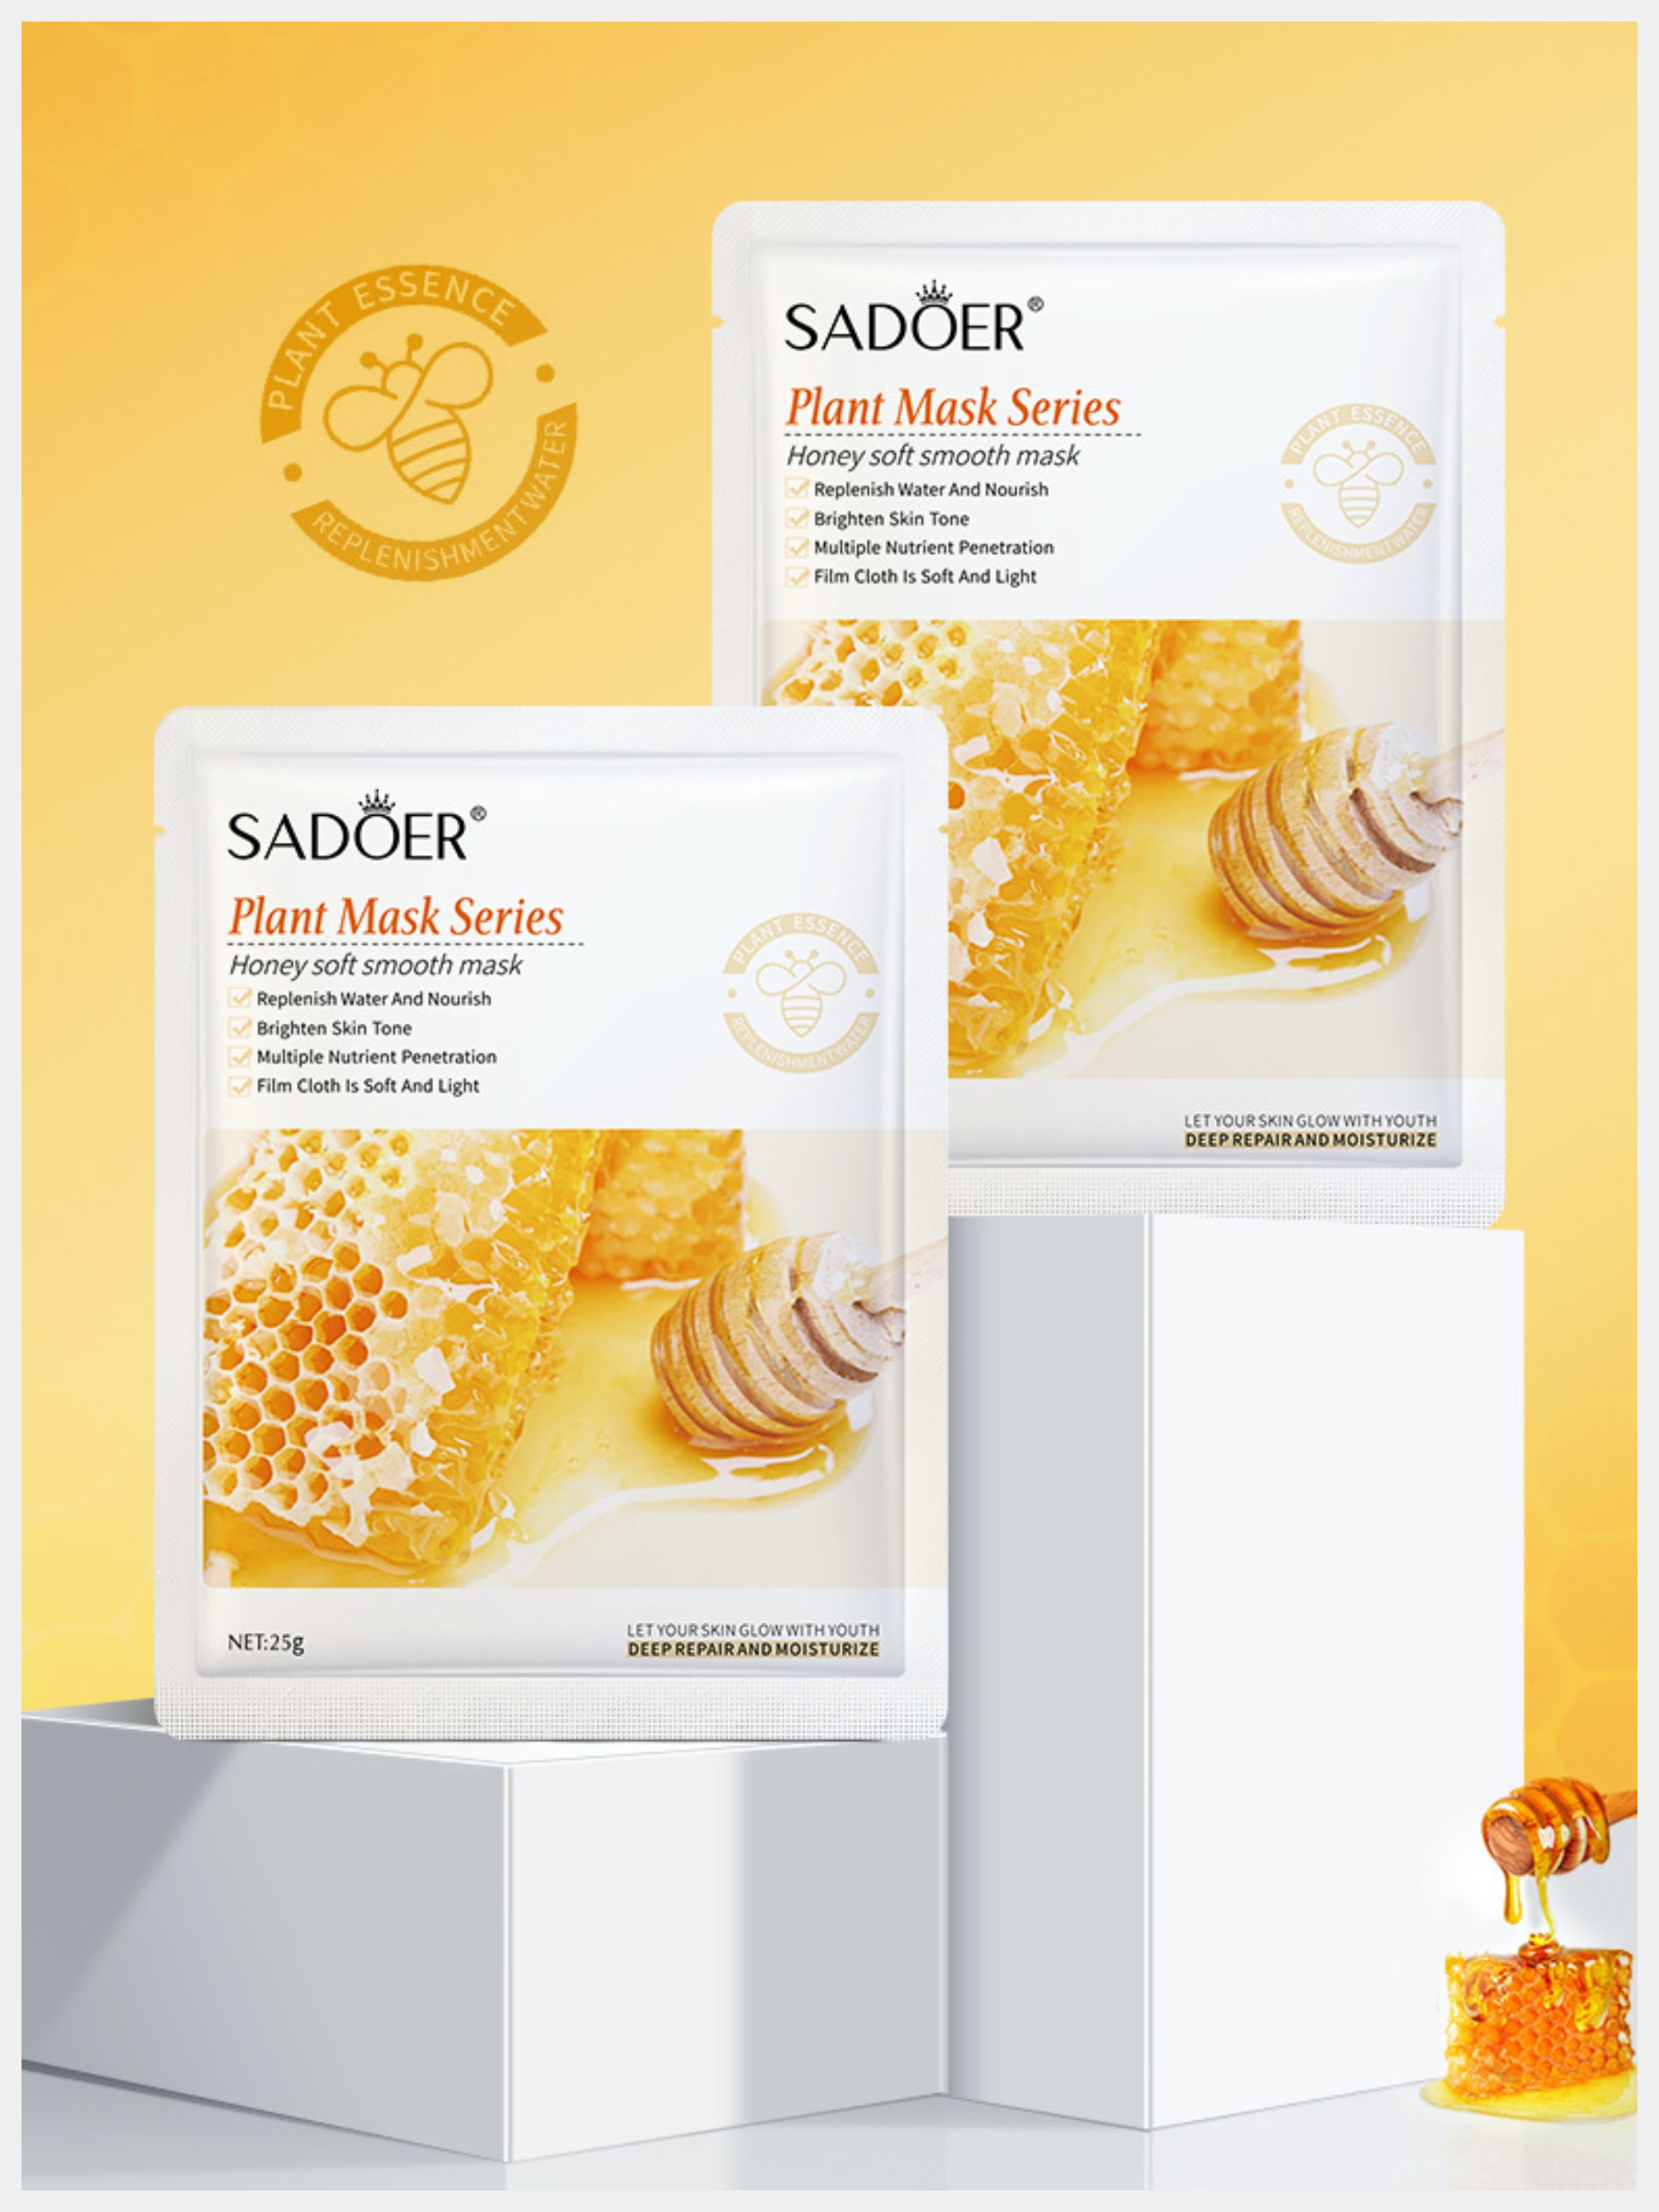 Sadoer vitamin c. Тканевые маски sadoer. Sadoer маска тканевая мед 25гр.. Sadoer маска для лица тканевая. Sadoer маска Plant Mask Series.